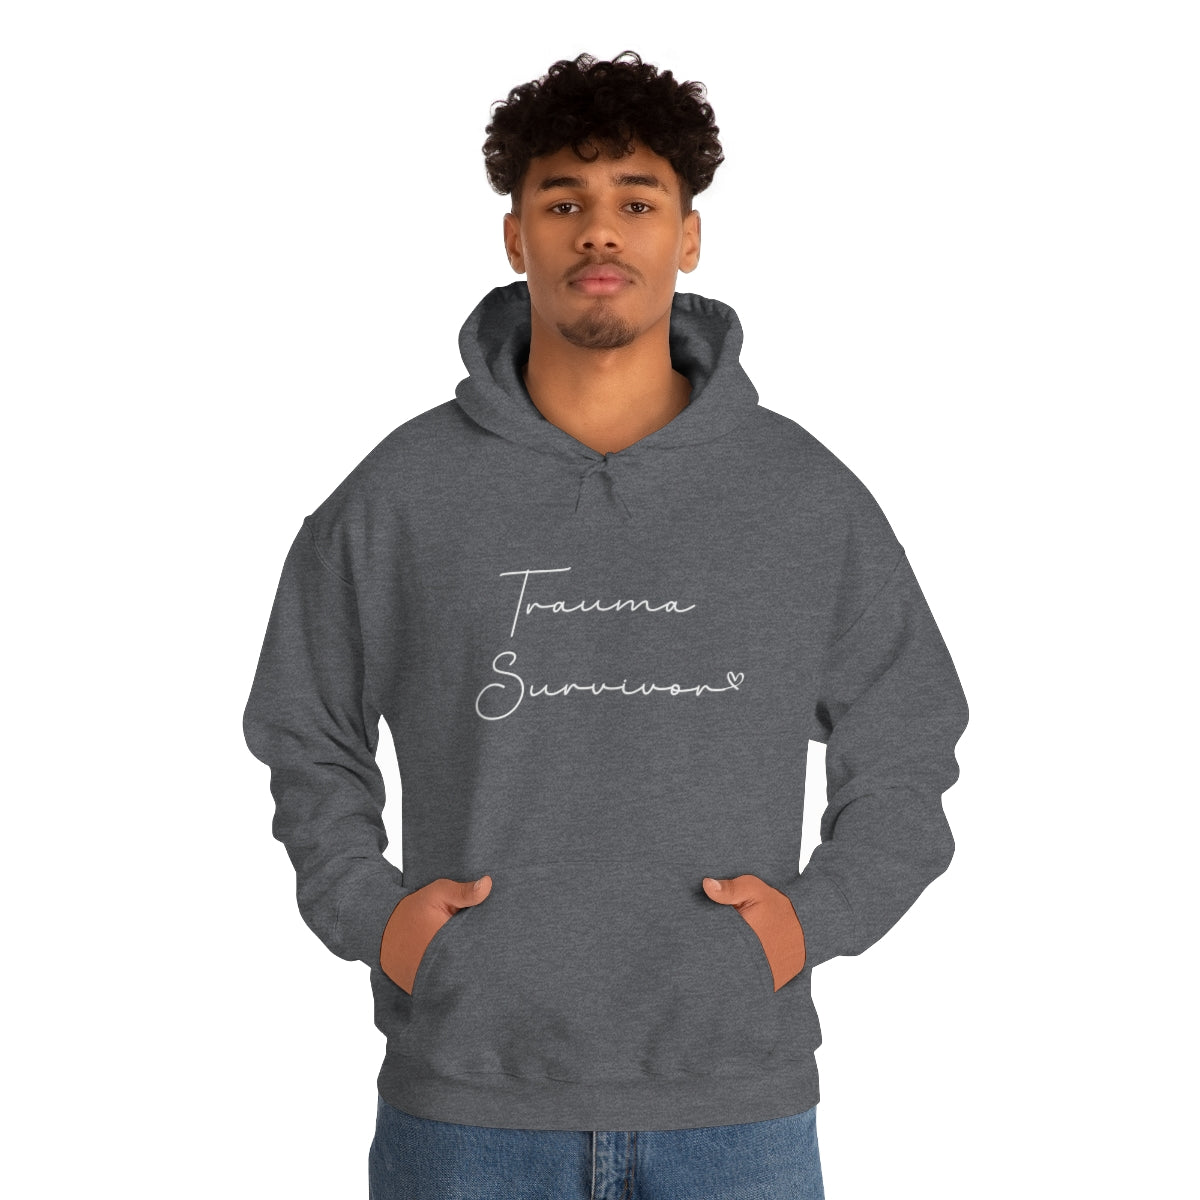 Trauma Survivor Hoodie Sweater Inspirational Sweatshirt, Sweater, Motivational Sweater, Gift For Women, Trauma Recovery